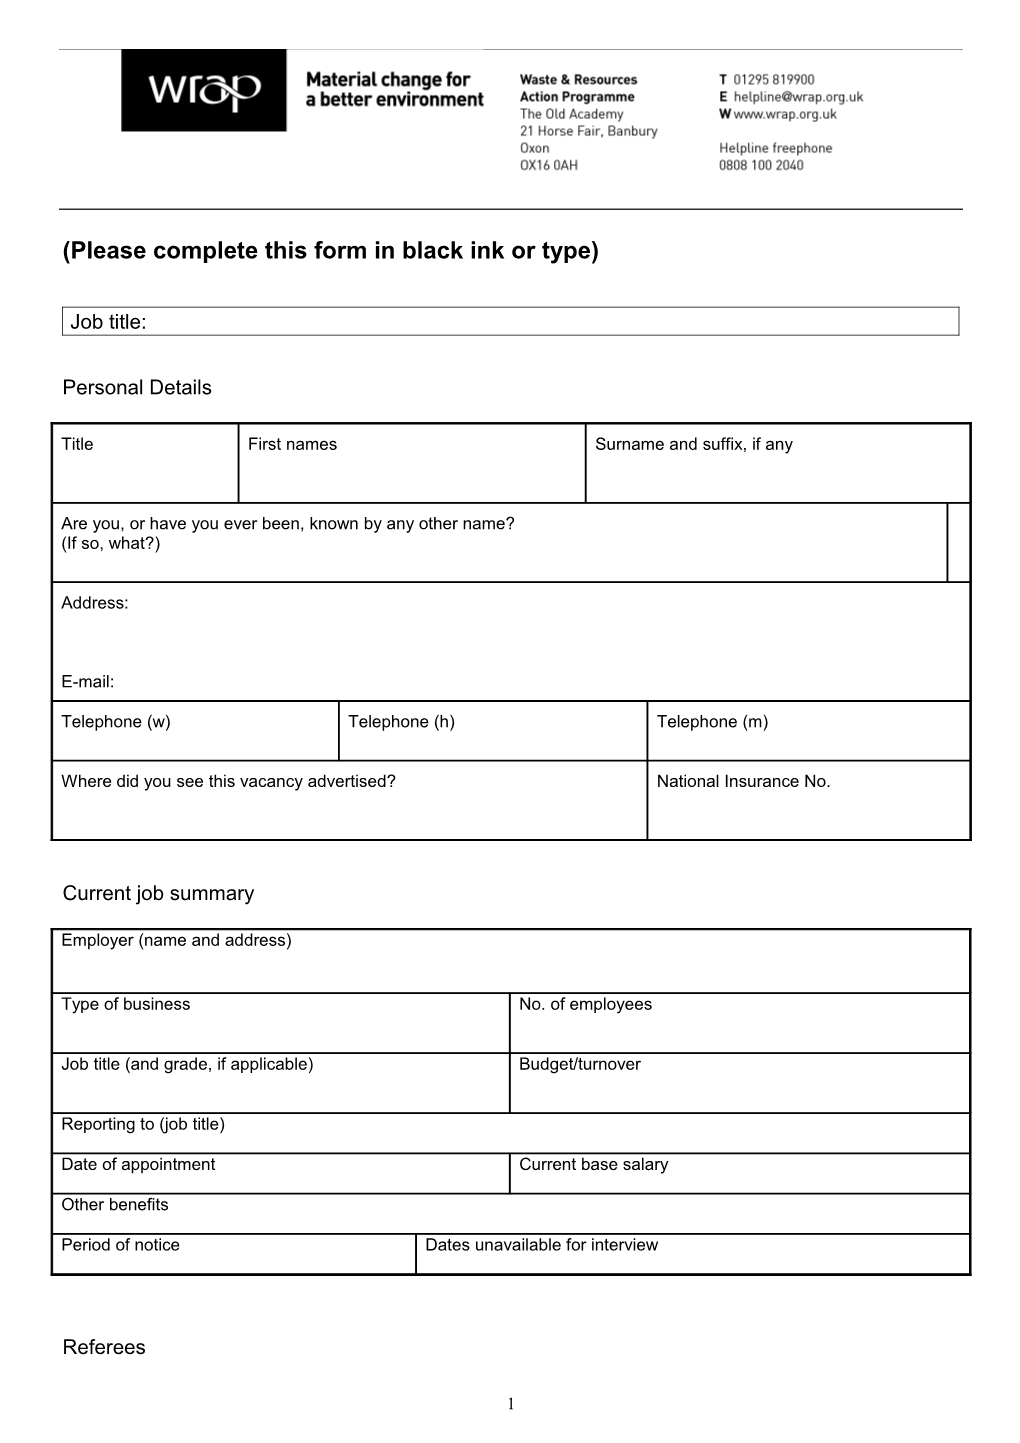 WRAP Application Form